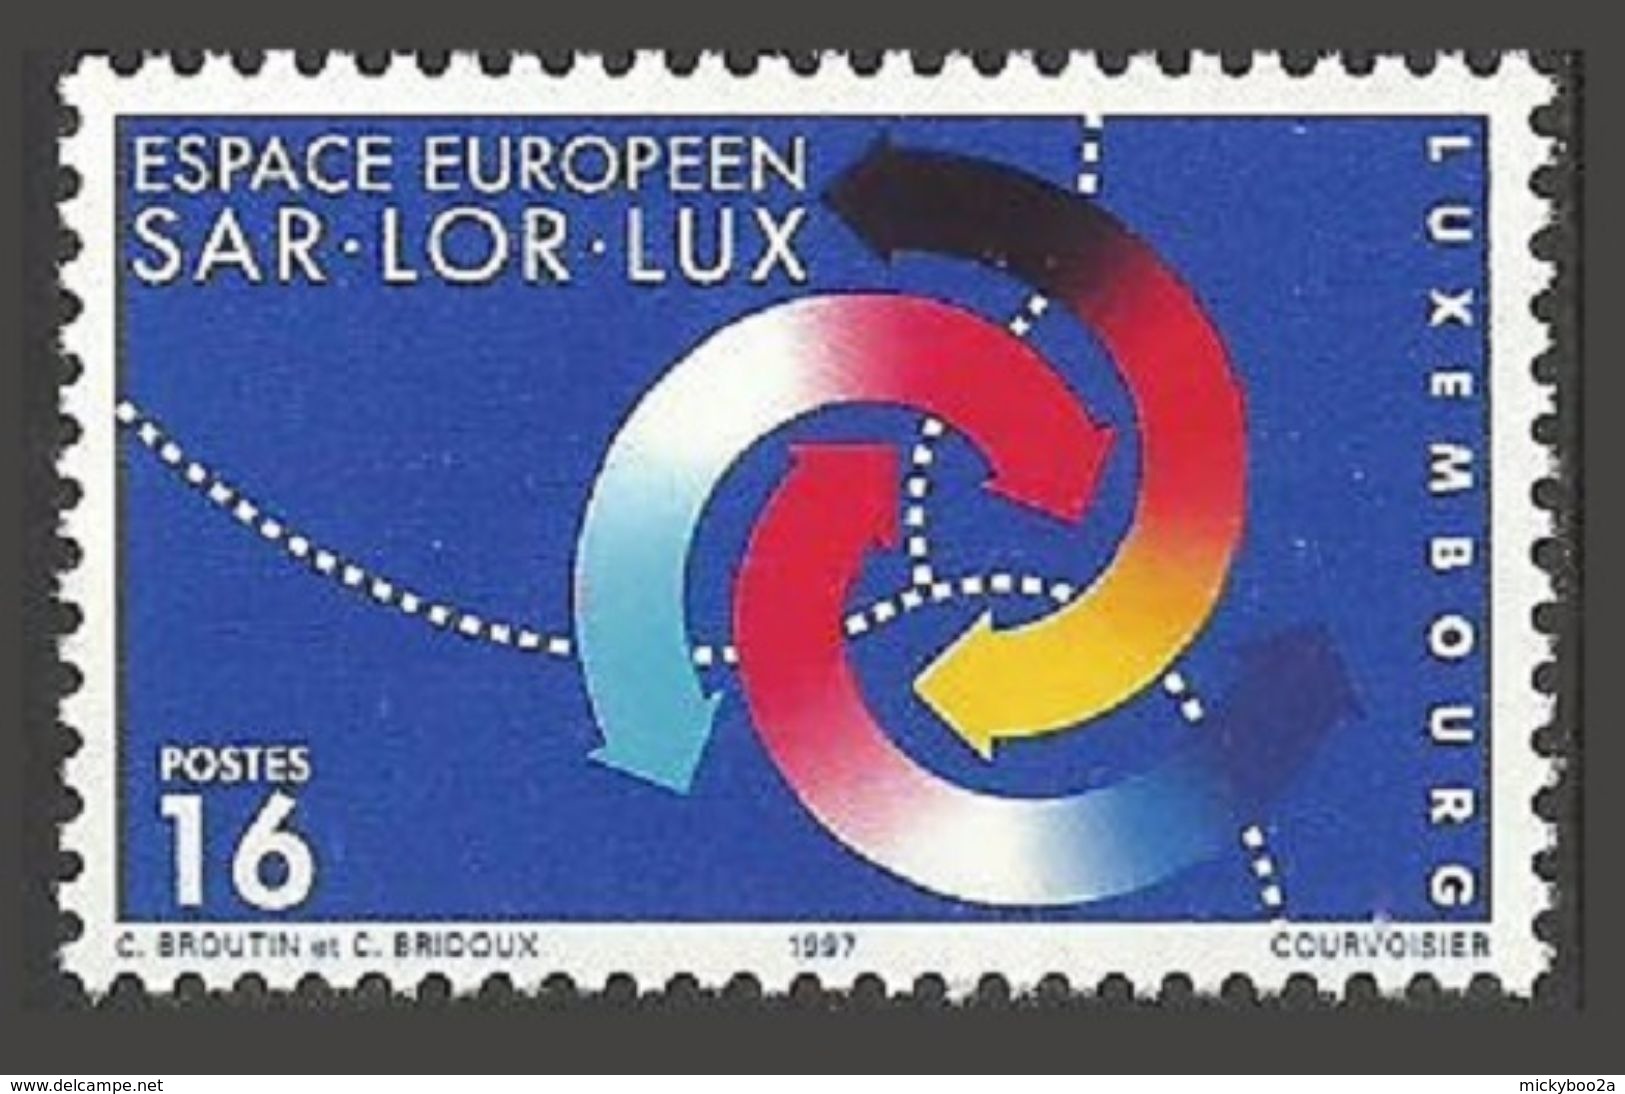 LUXEMBOURG 1997 SAR- LOR-LUX EUROPEAN REGION SET MNH - Nuevos